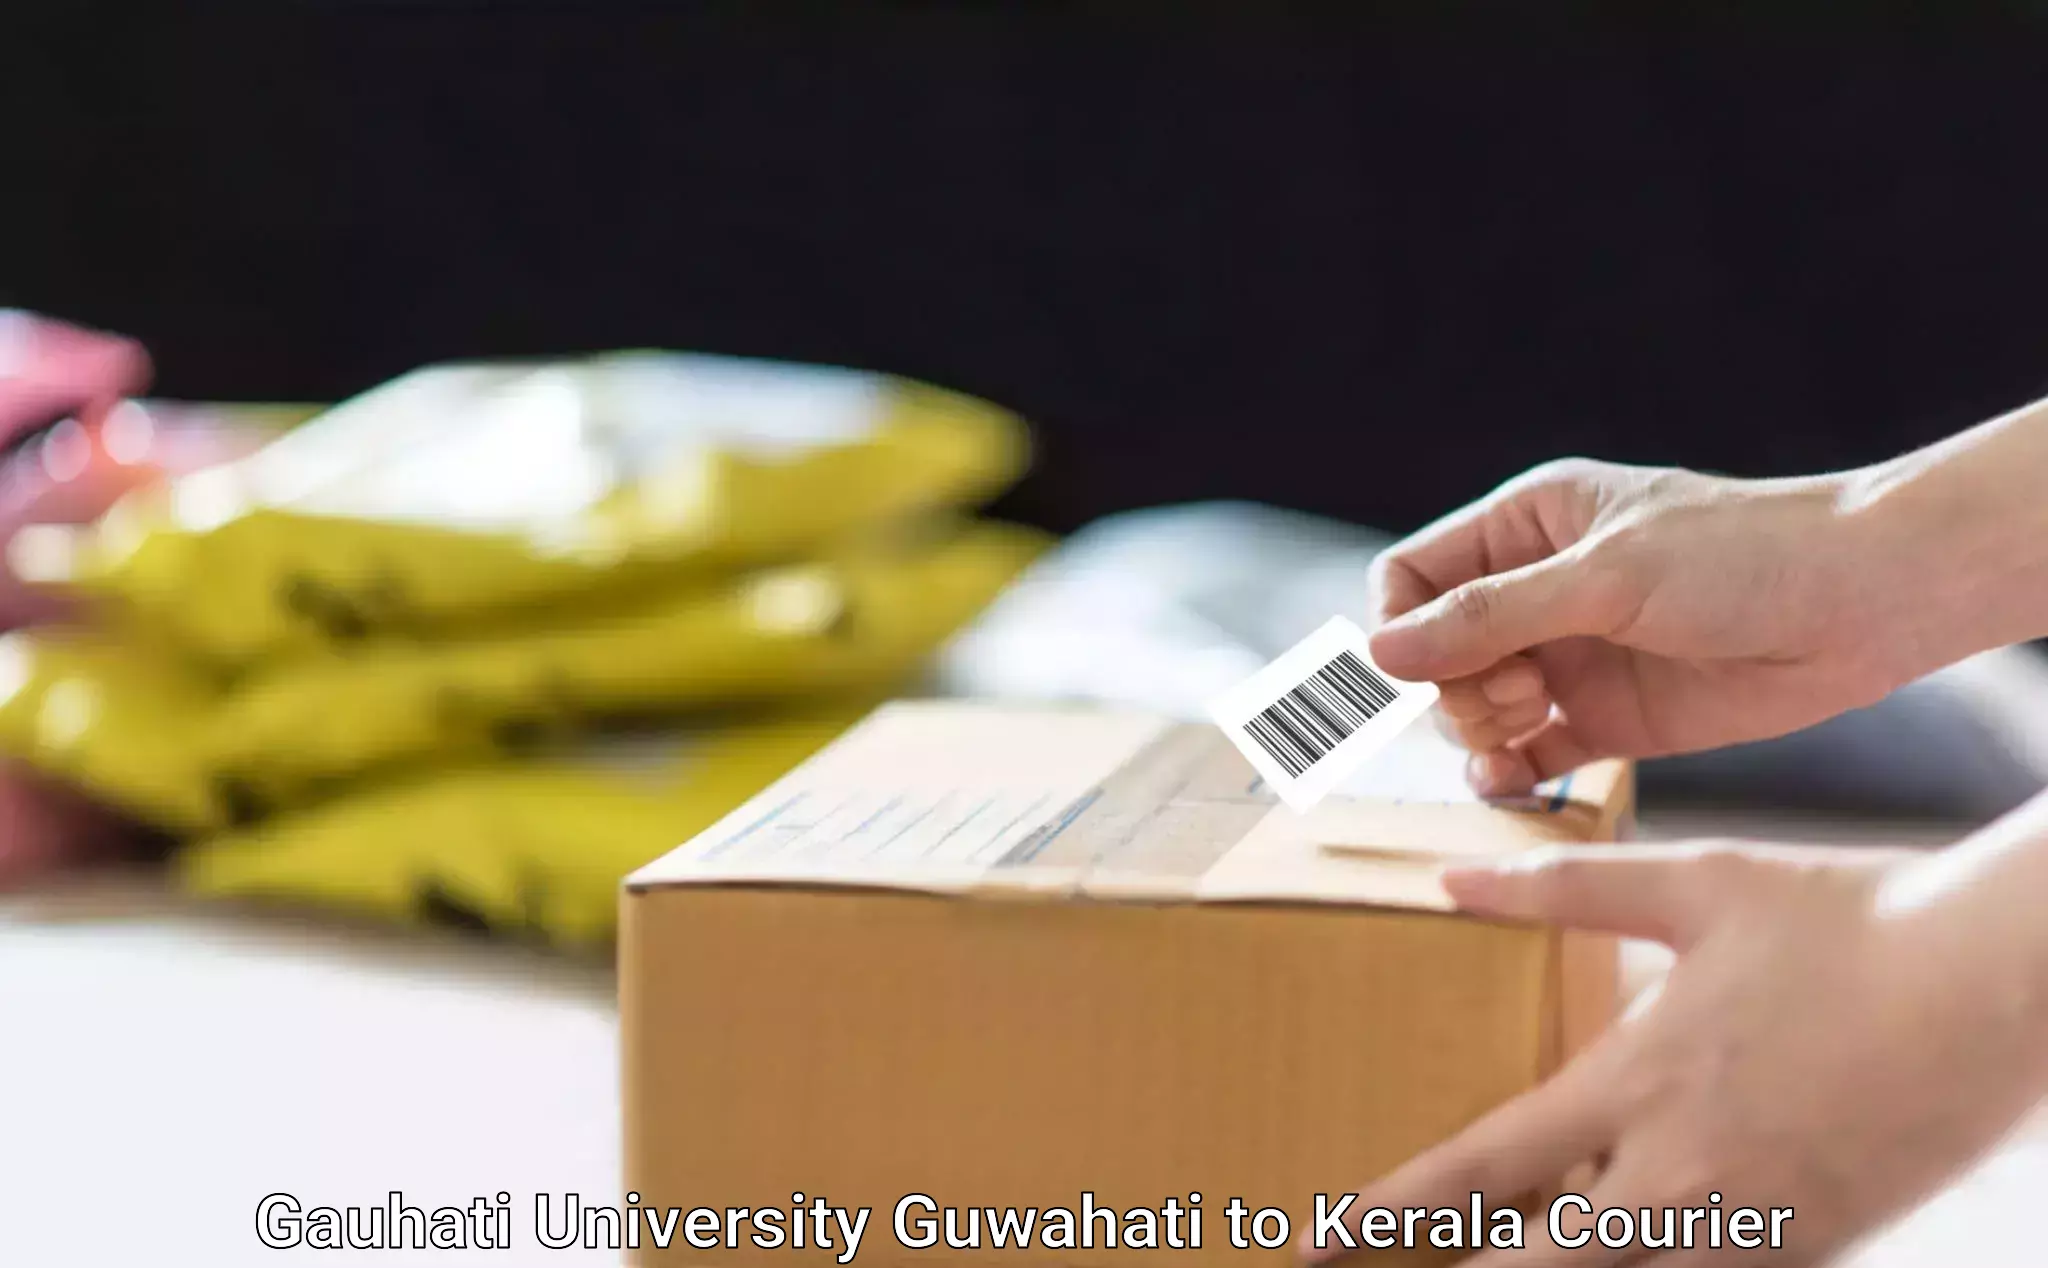 Quality courier services Gauhati University Guwahati to Guruvayur